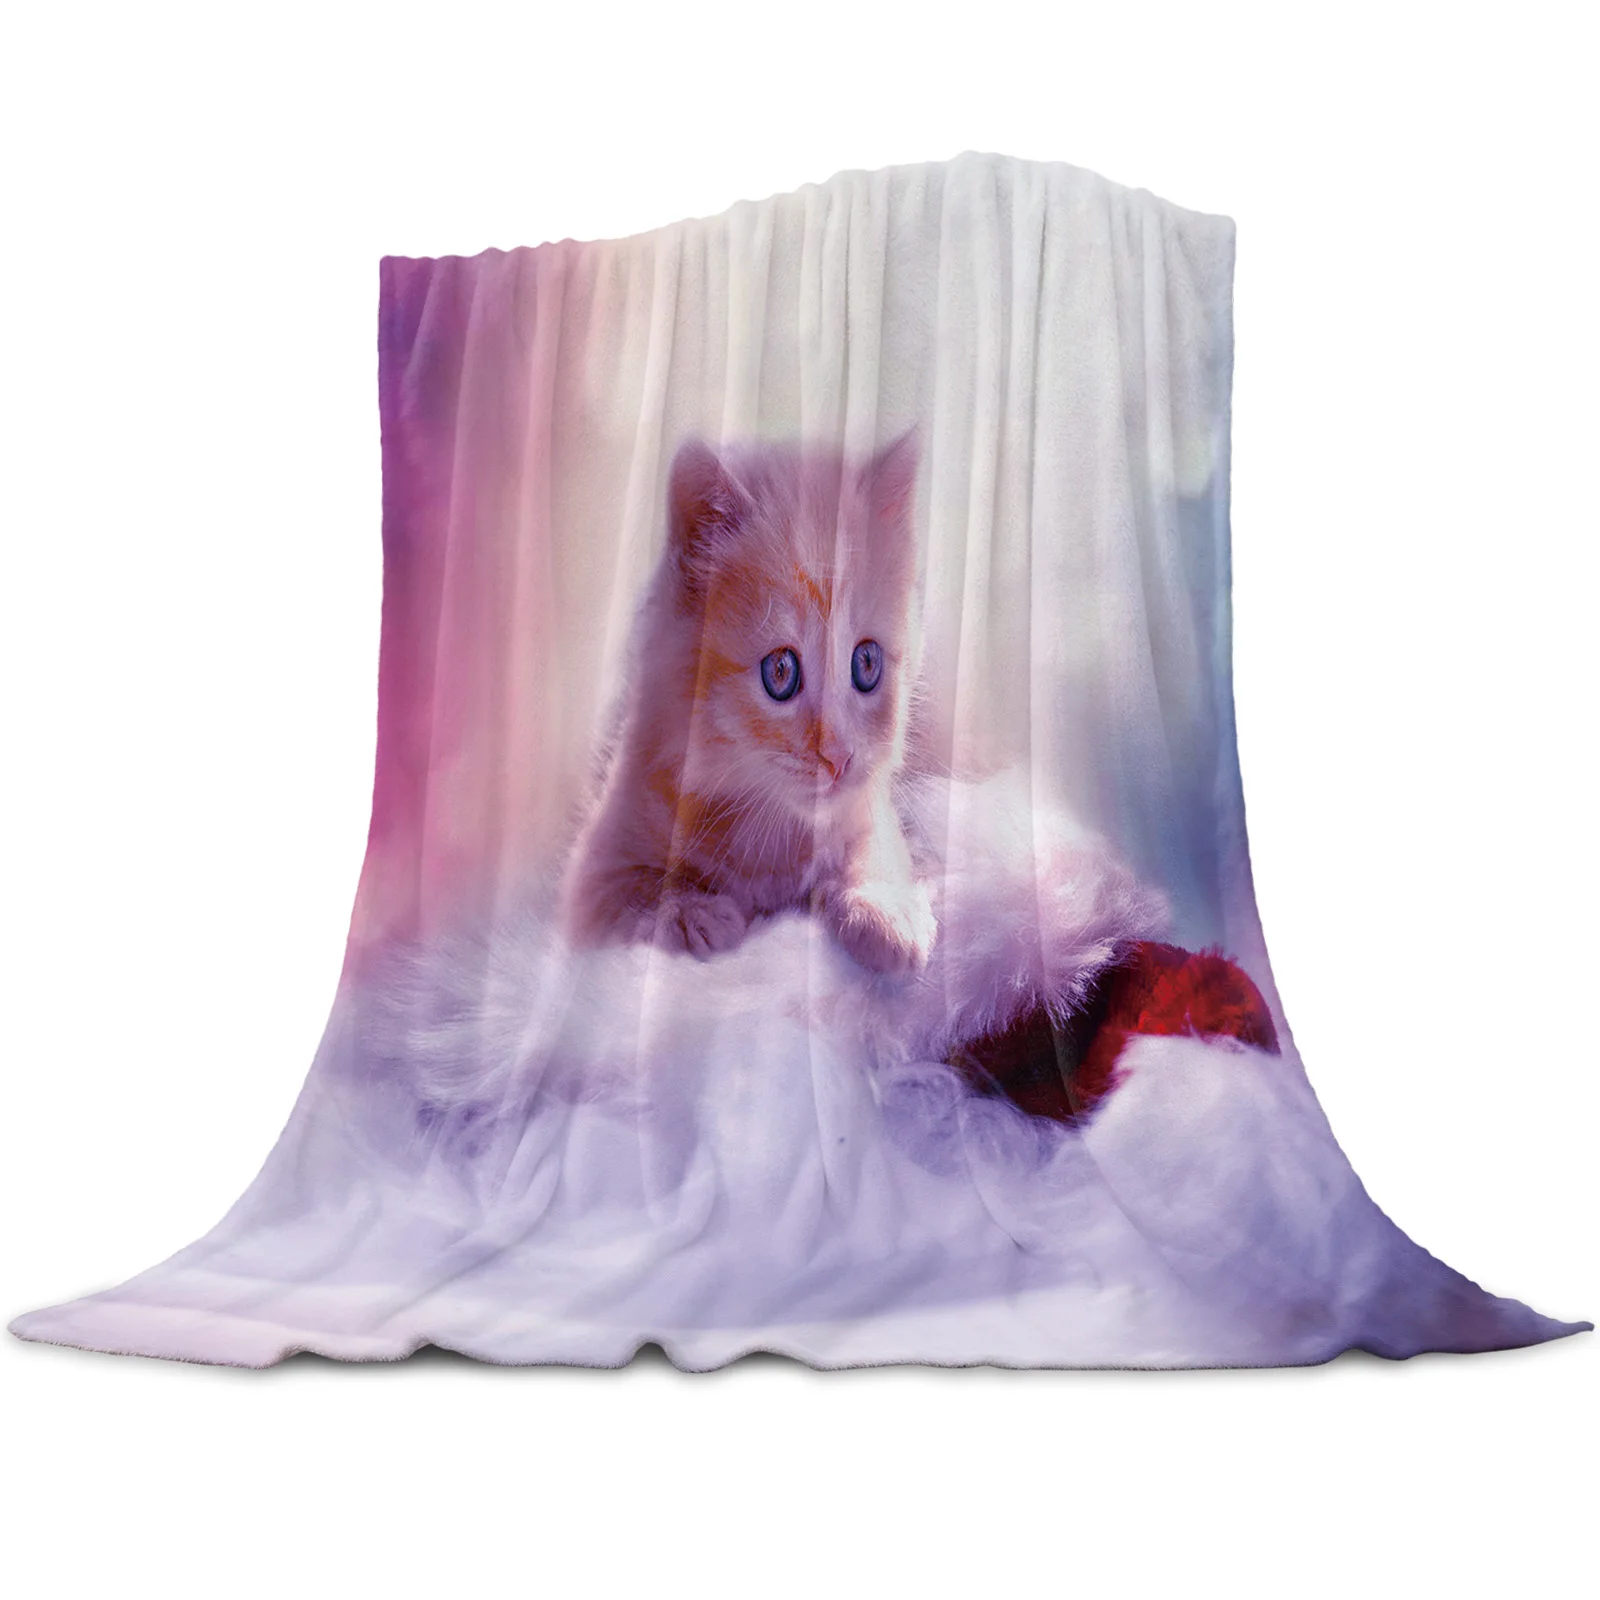 

Lightweight Super Soft Cozy Pet Cat Cute Pink Carnation Fleece Throw Bed Blanket Flowers Blanket Gift for Adults Kids